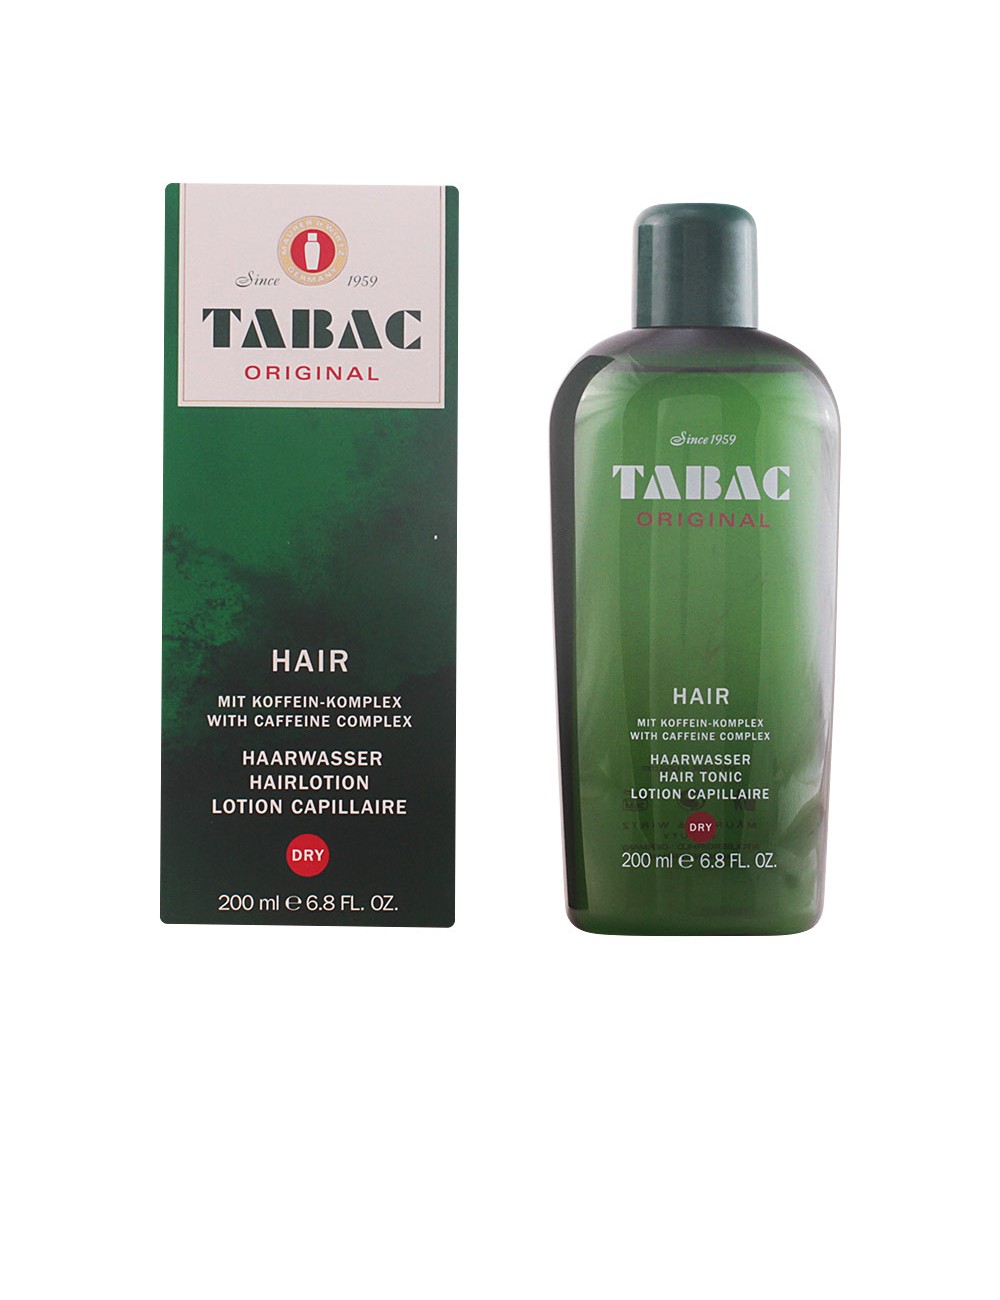 TABAC ORIGINAL hair lotion 200ml